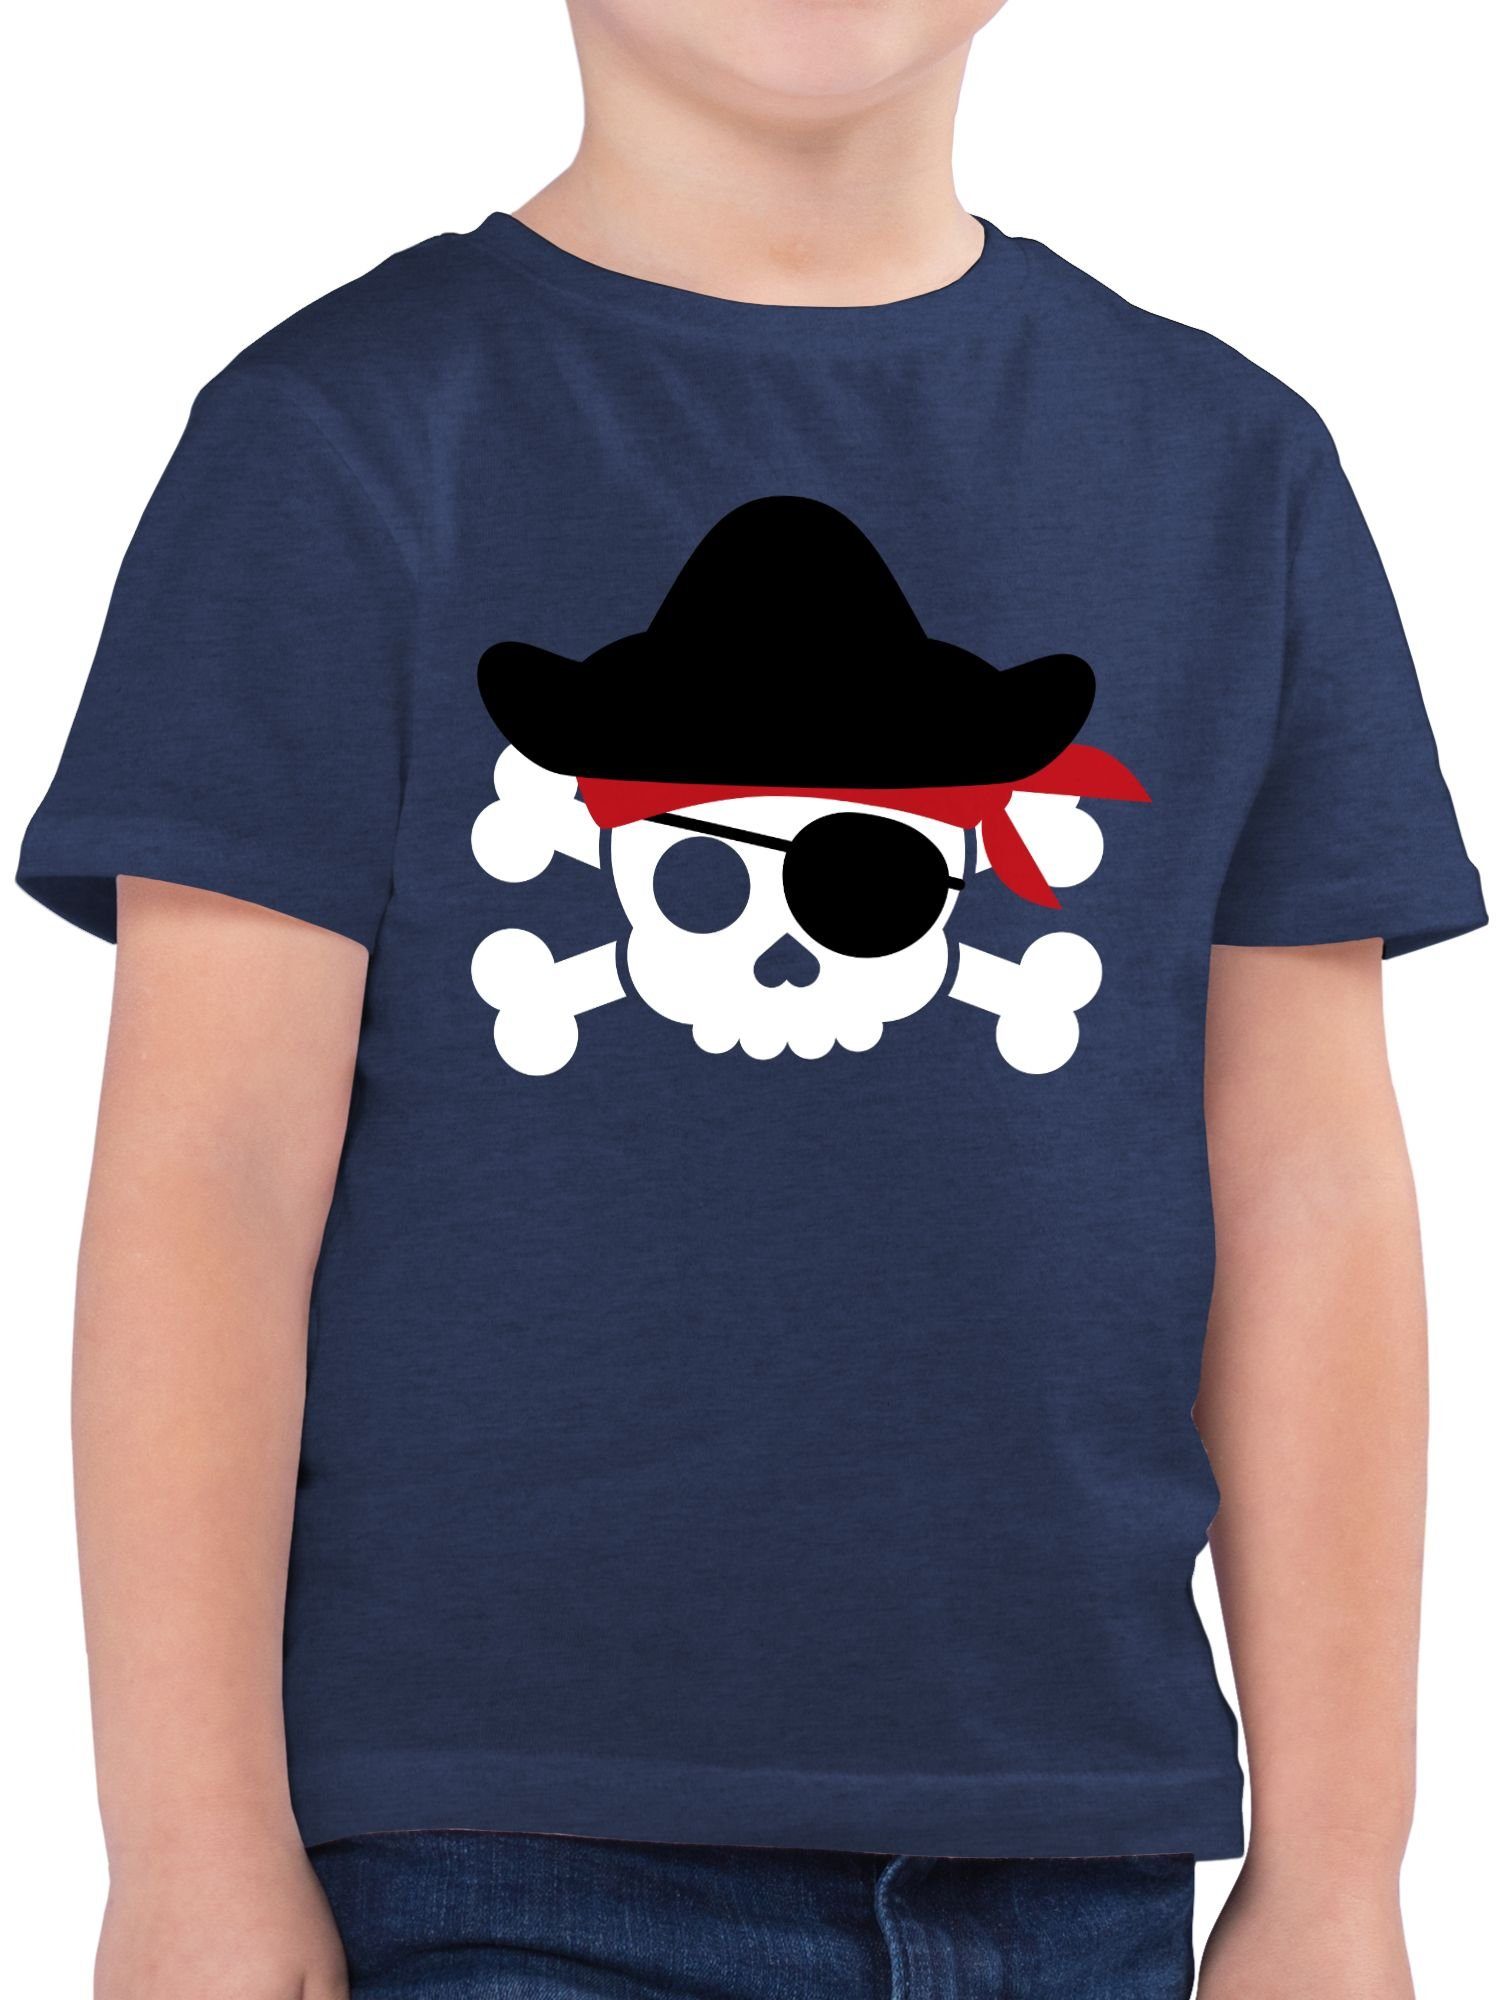 3 T-Shirt - Fasching Piraten Piratenkostüm Geburtstags Karneval Totenkopf Pirat Shirtracer Dunkelblau Meliert Piratenkopf & Kostüm